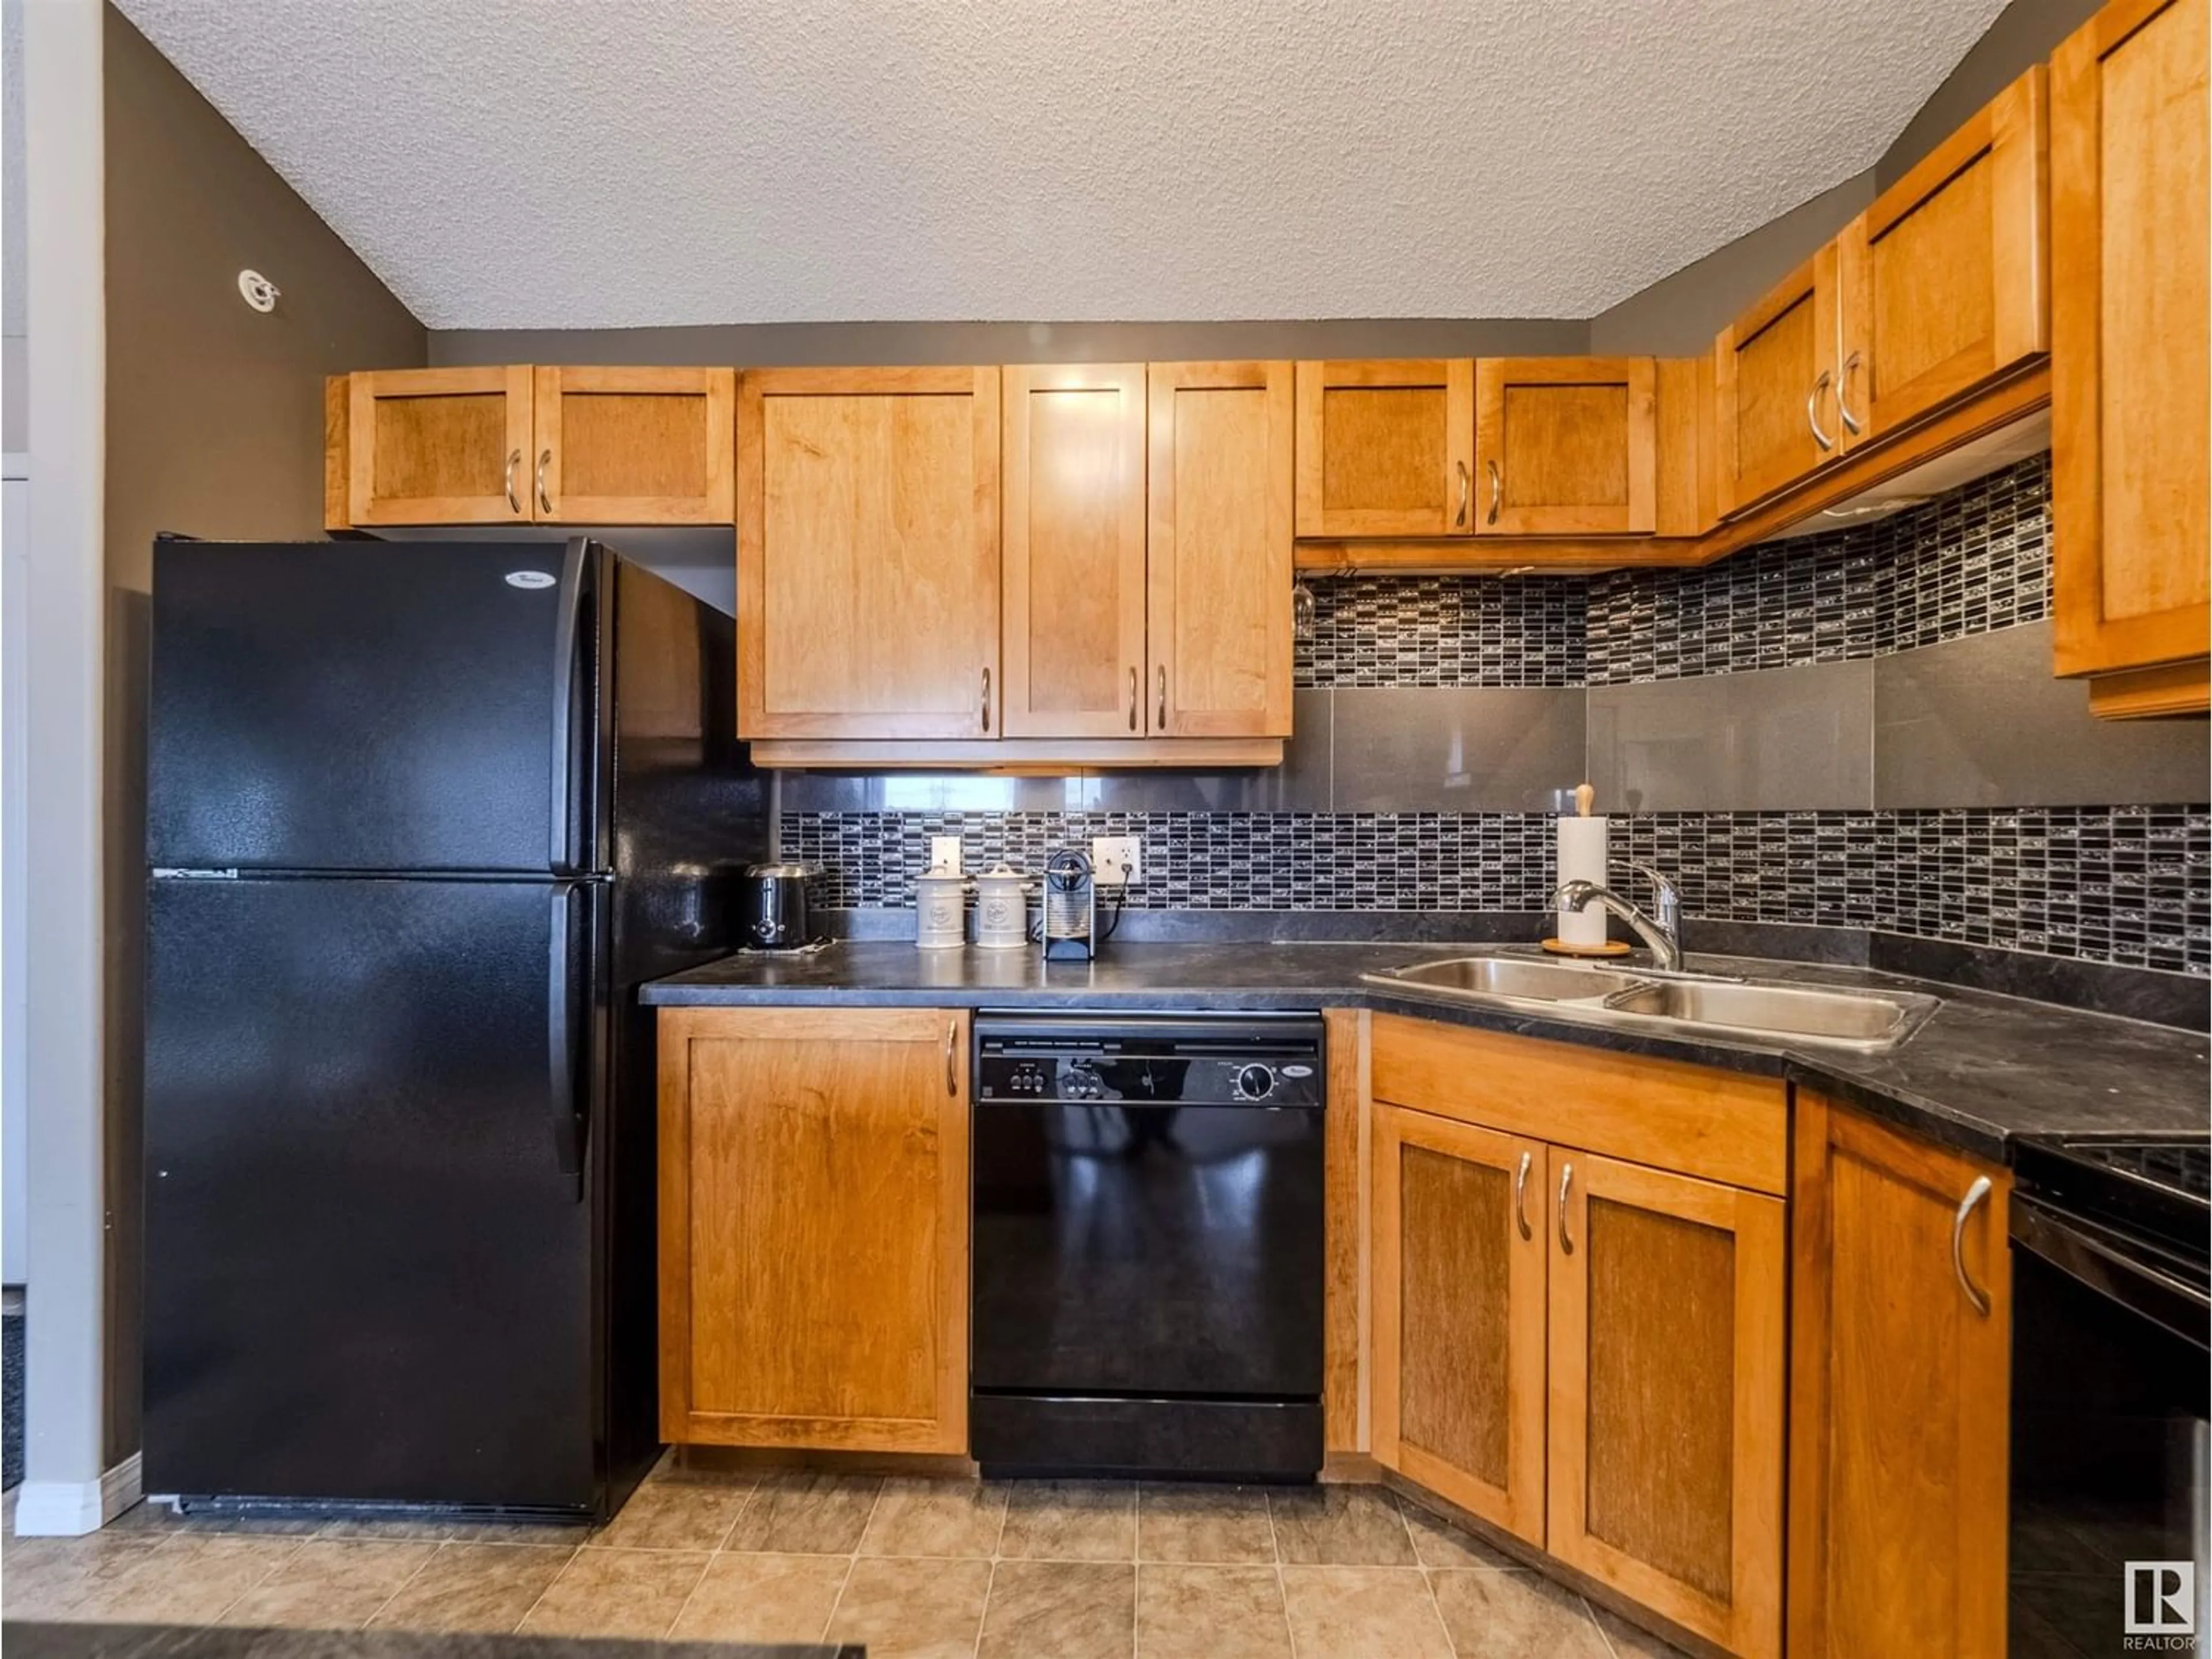 Standard kitchen for #1408 7339 SOUTH TERWILLEGAR DR NW, Edmonton Alberta T6R0E1